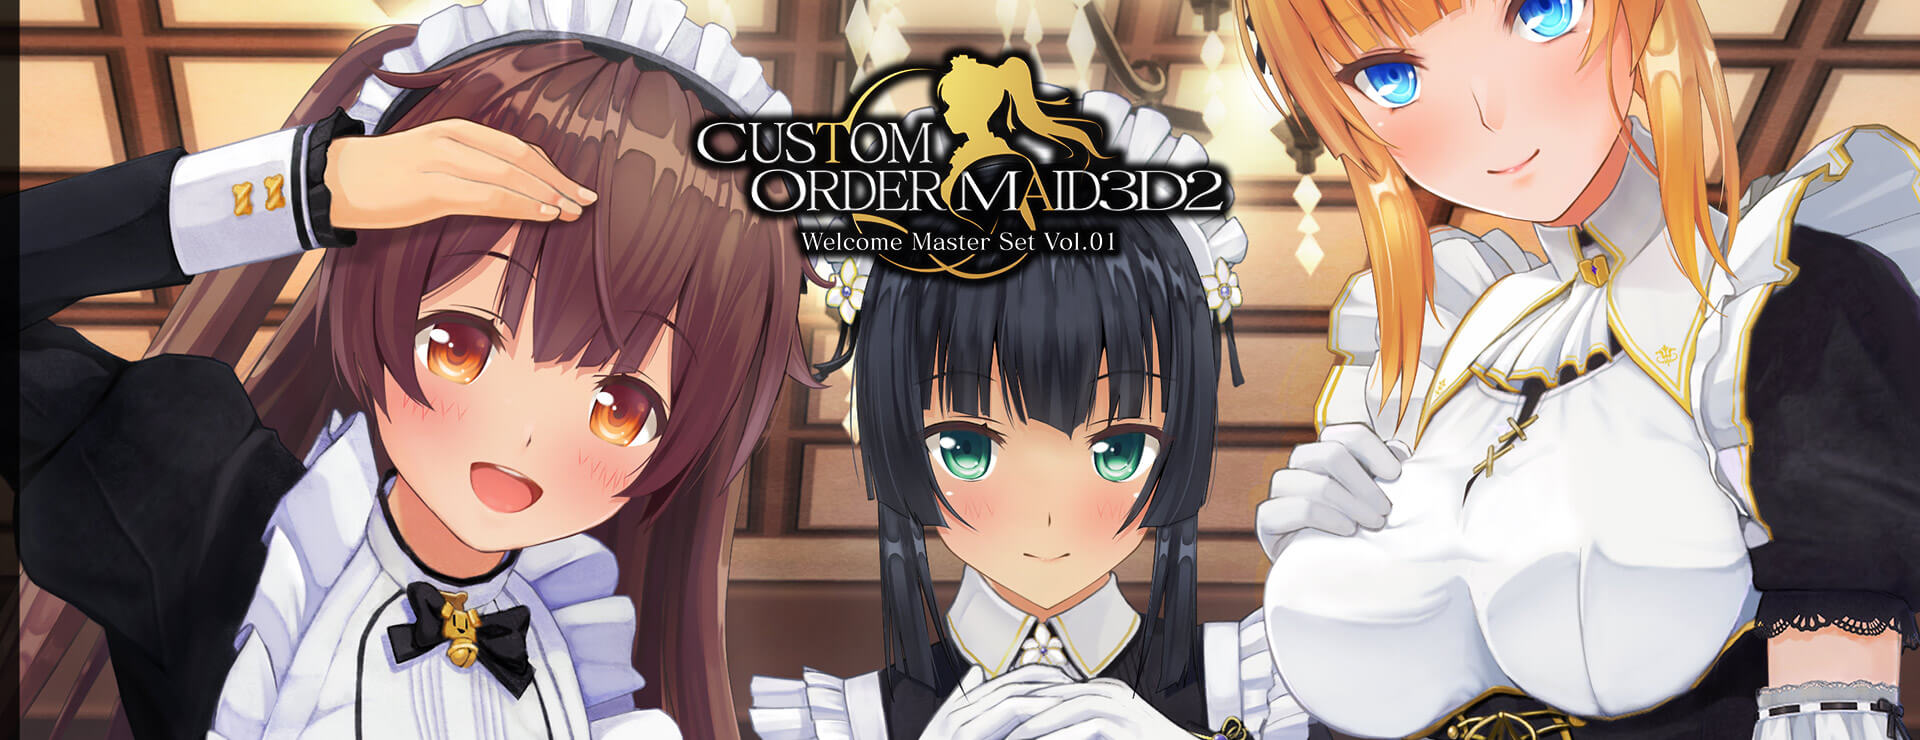 Custom Order Maid 3D2: Welcome Master Set Vol. 01 DLC - Simulation Game